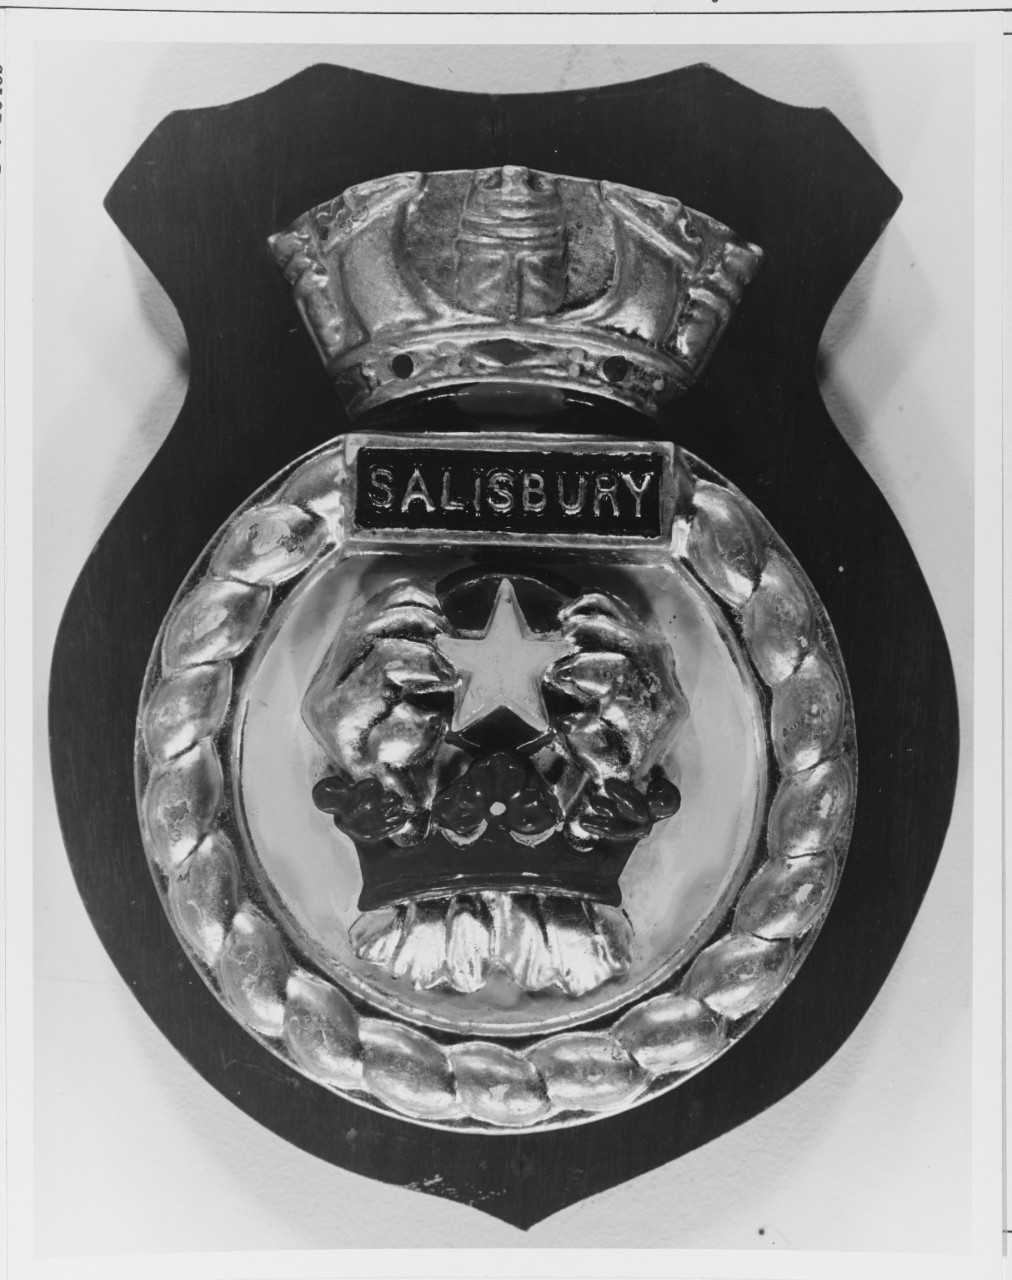 Insignia: HMS SALISBURY (British Frigate of 1957.)